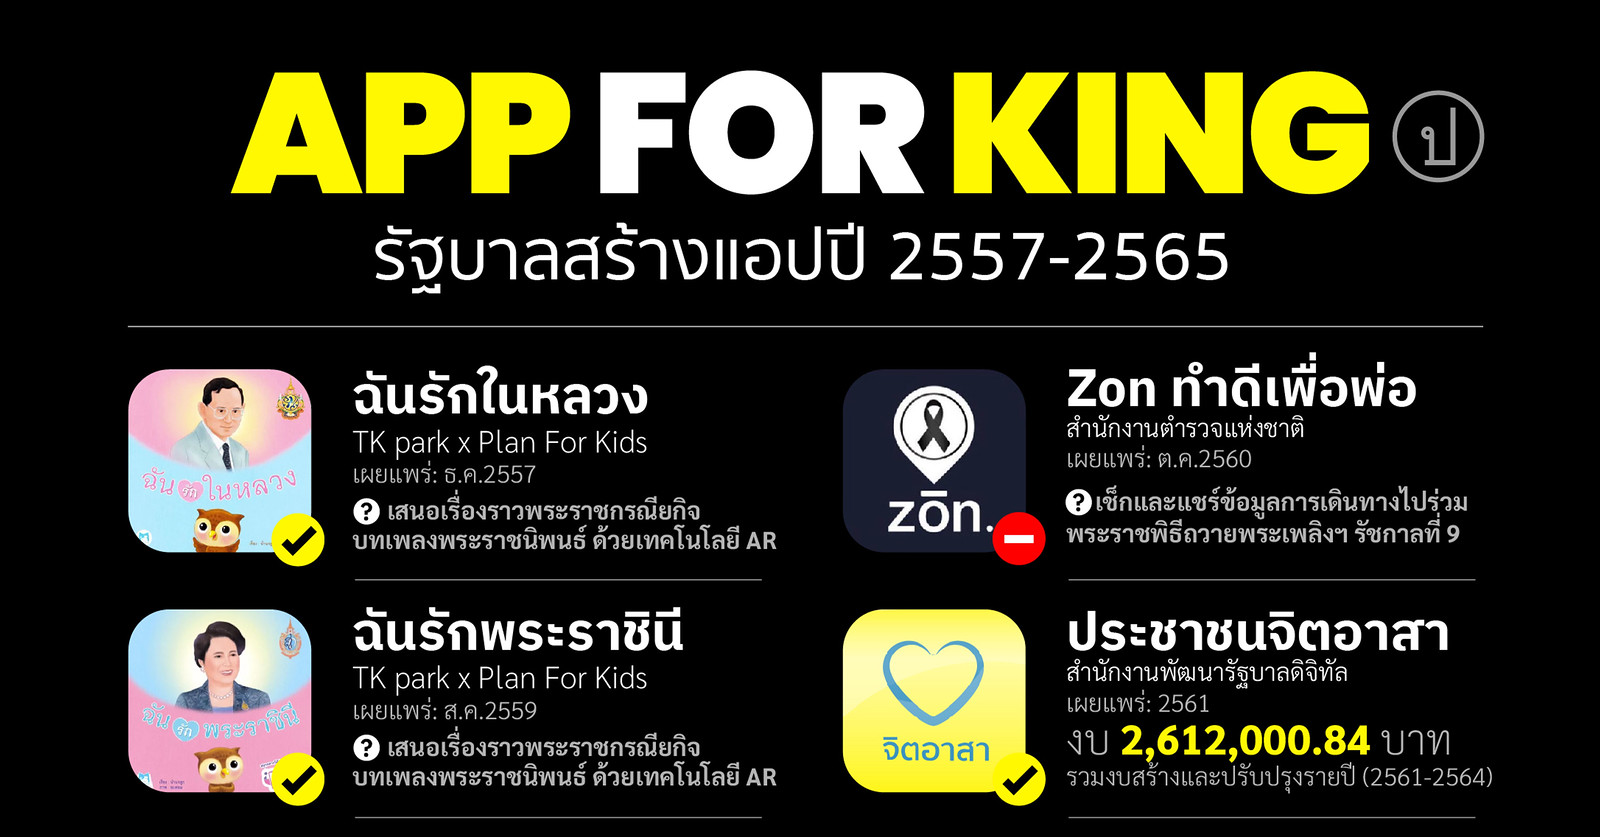 APP FOR KING รัฐบาลสร้างแอปปี 2557-2565